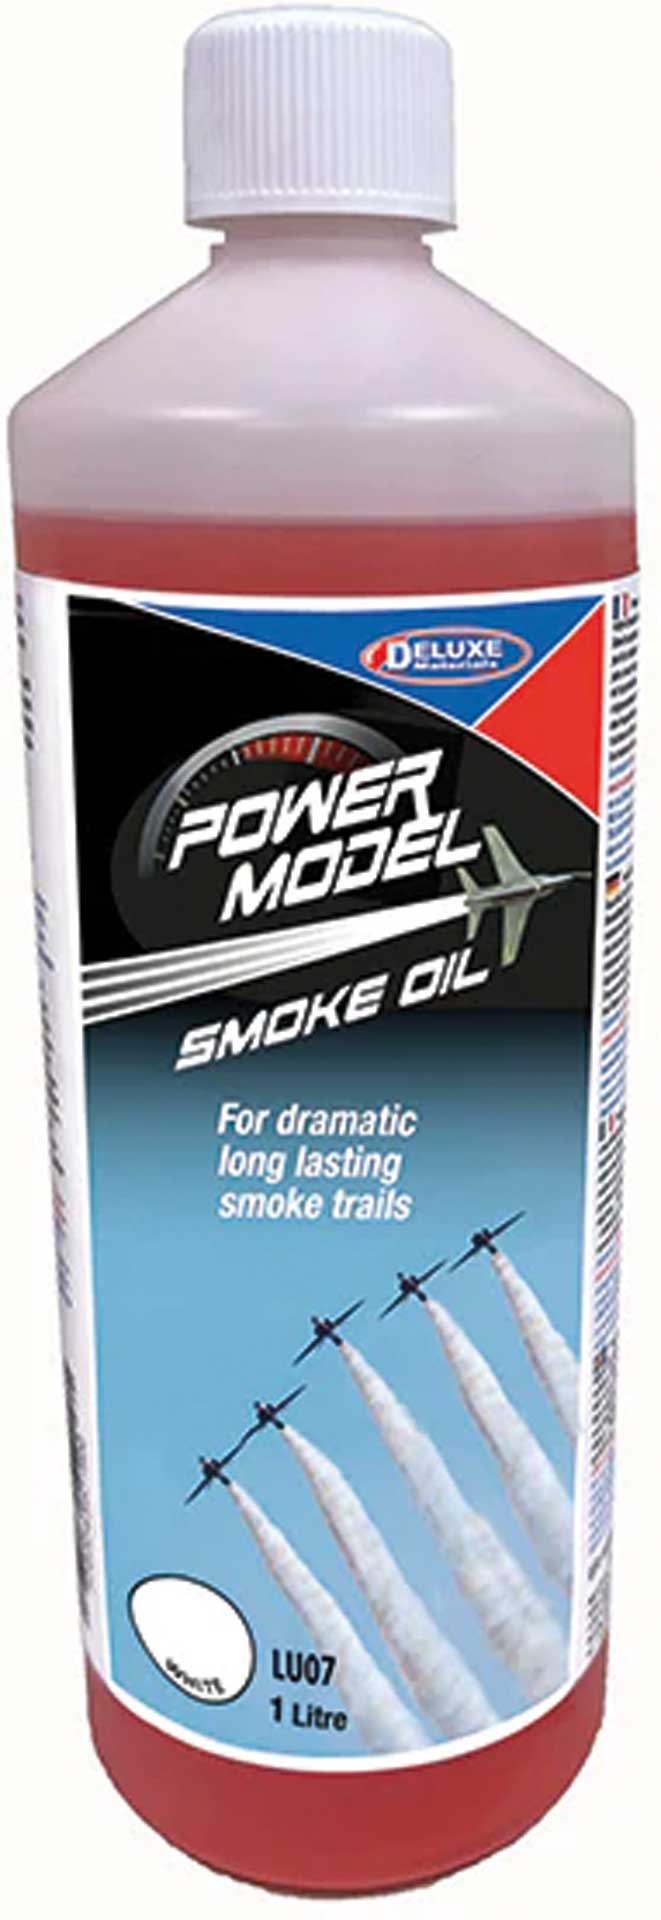 DELUXE PowerModel Smoke Oil 1 Liter